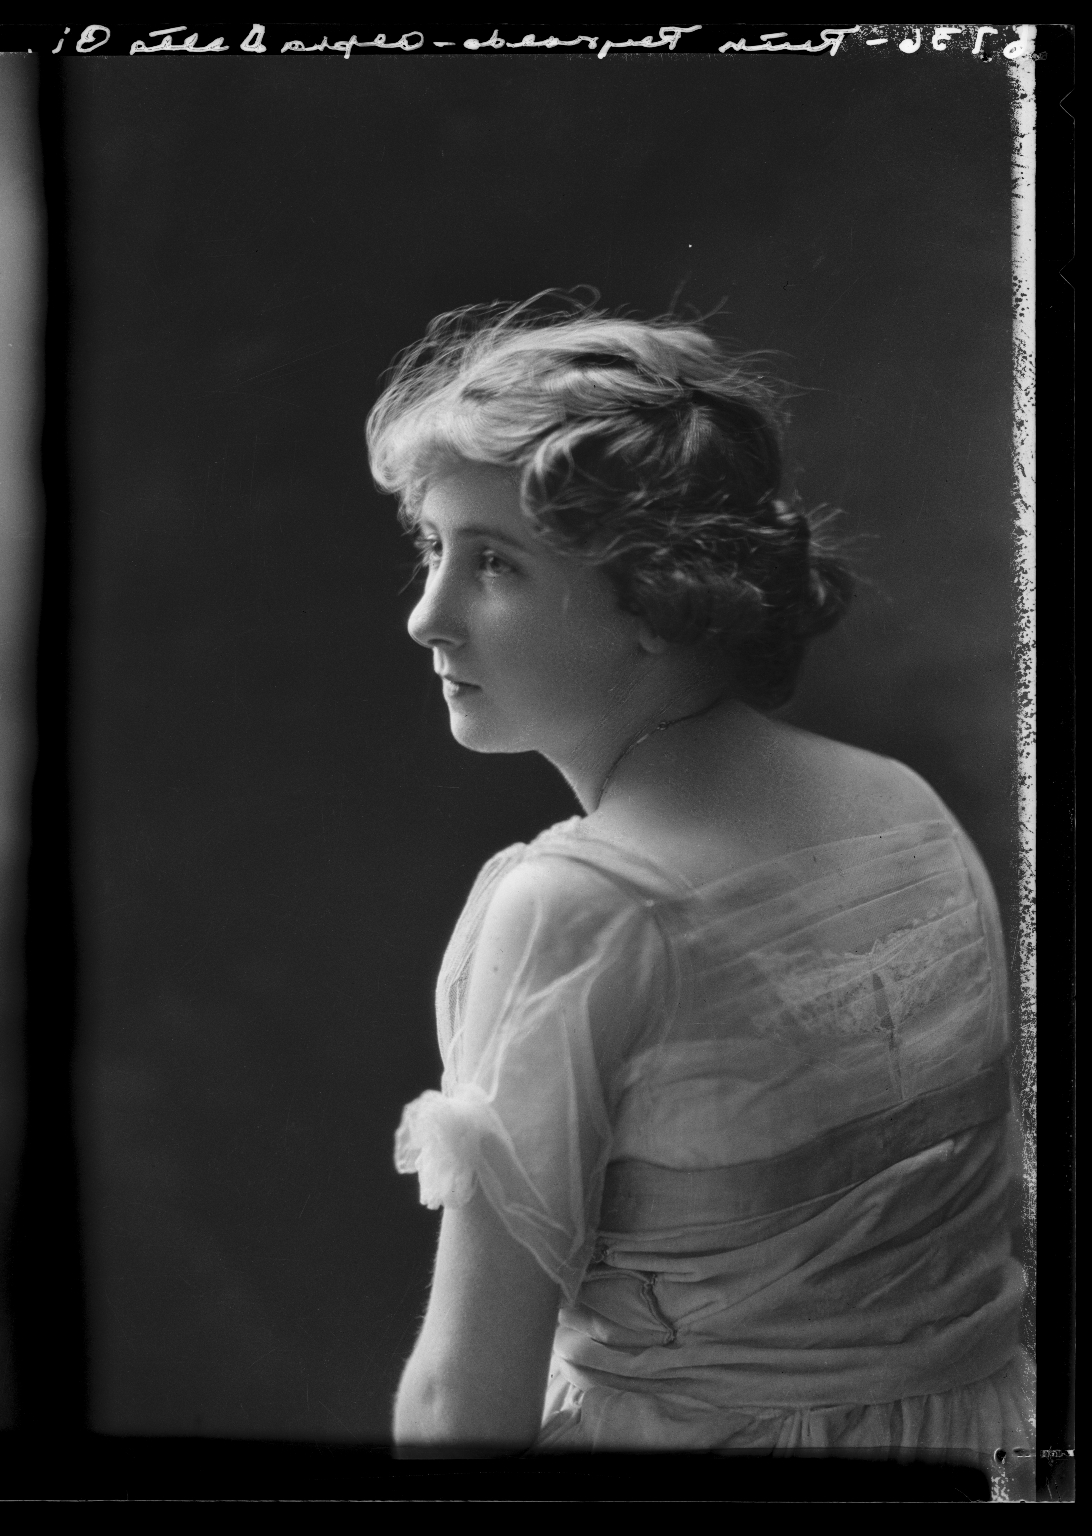 Portraits of Ruth Reynolds